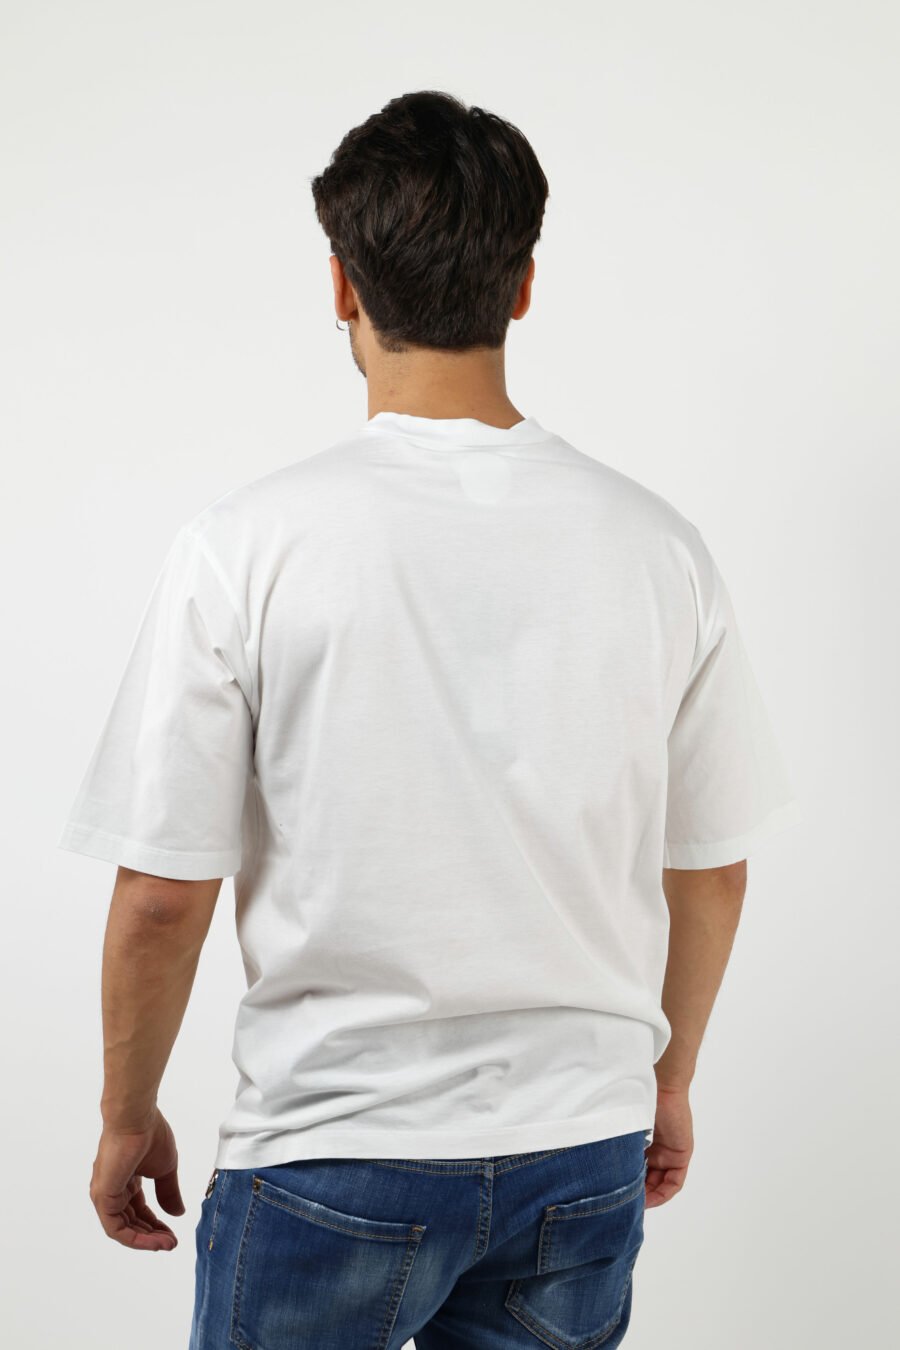 Camiseta blanca "oversize" con maxilogo "pop culture art 80's" - 8054148265694 3